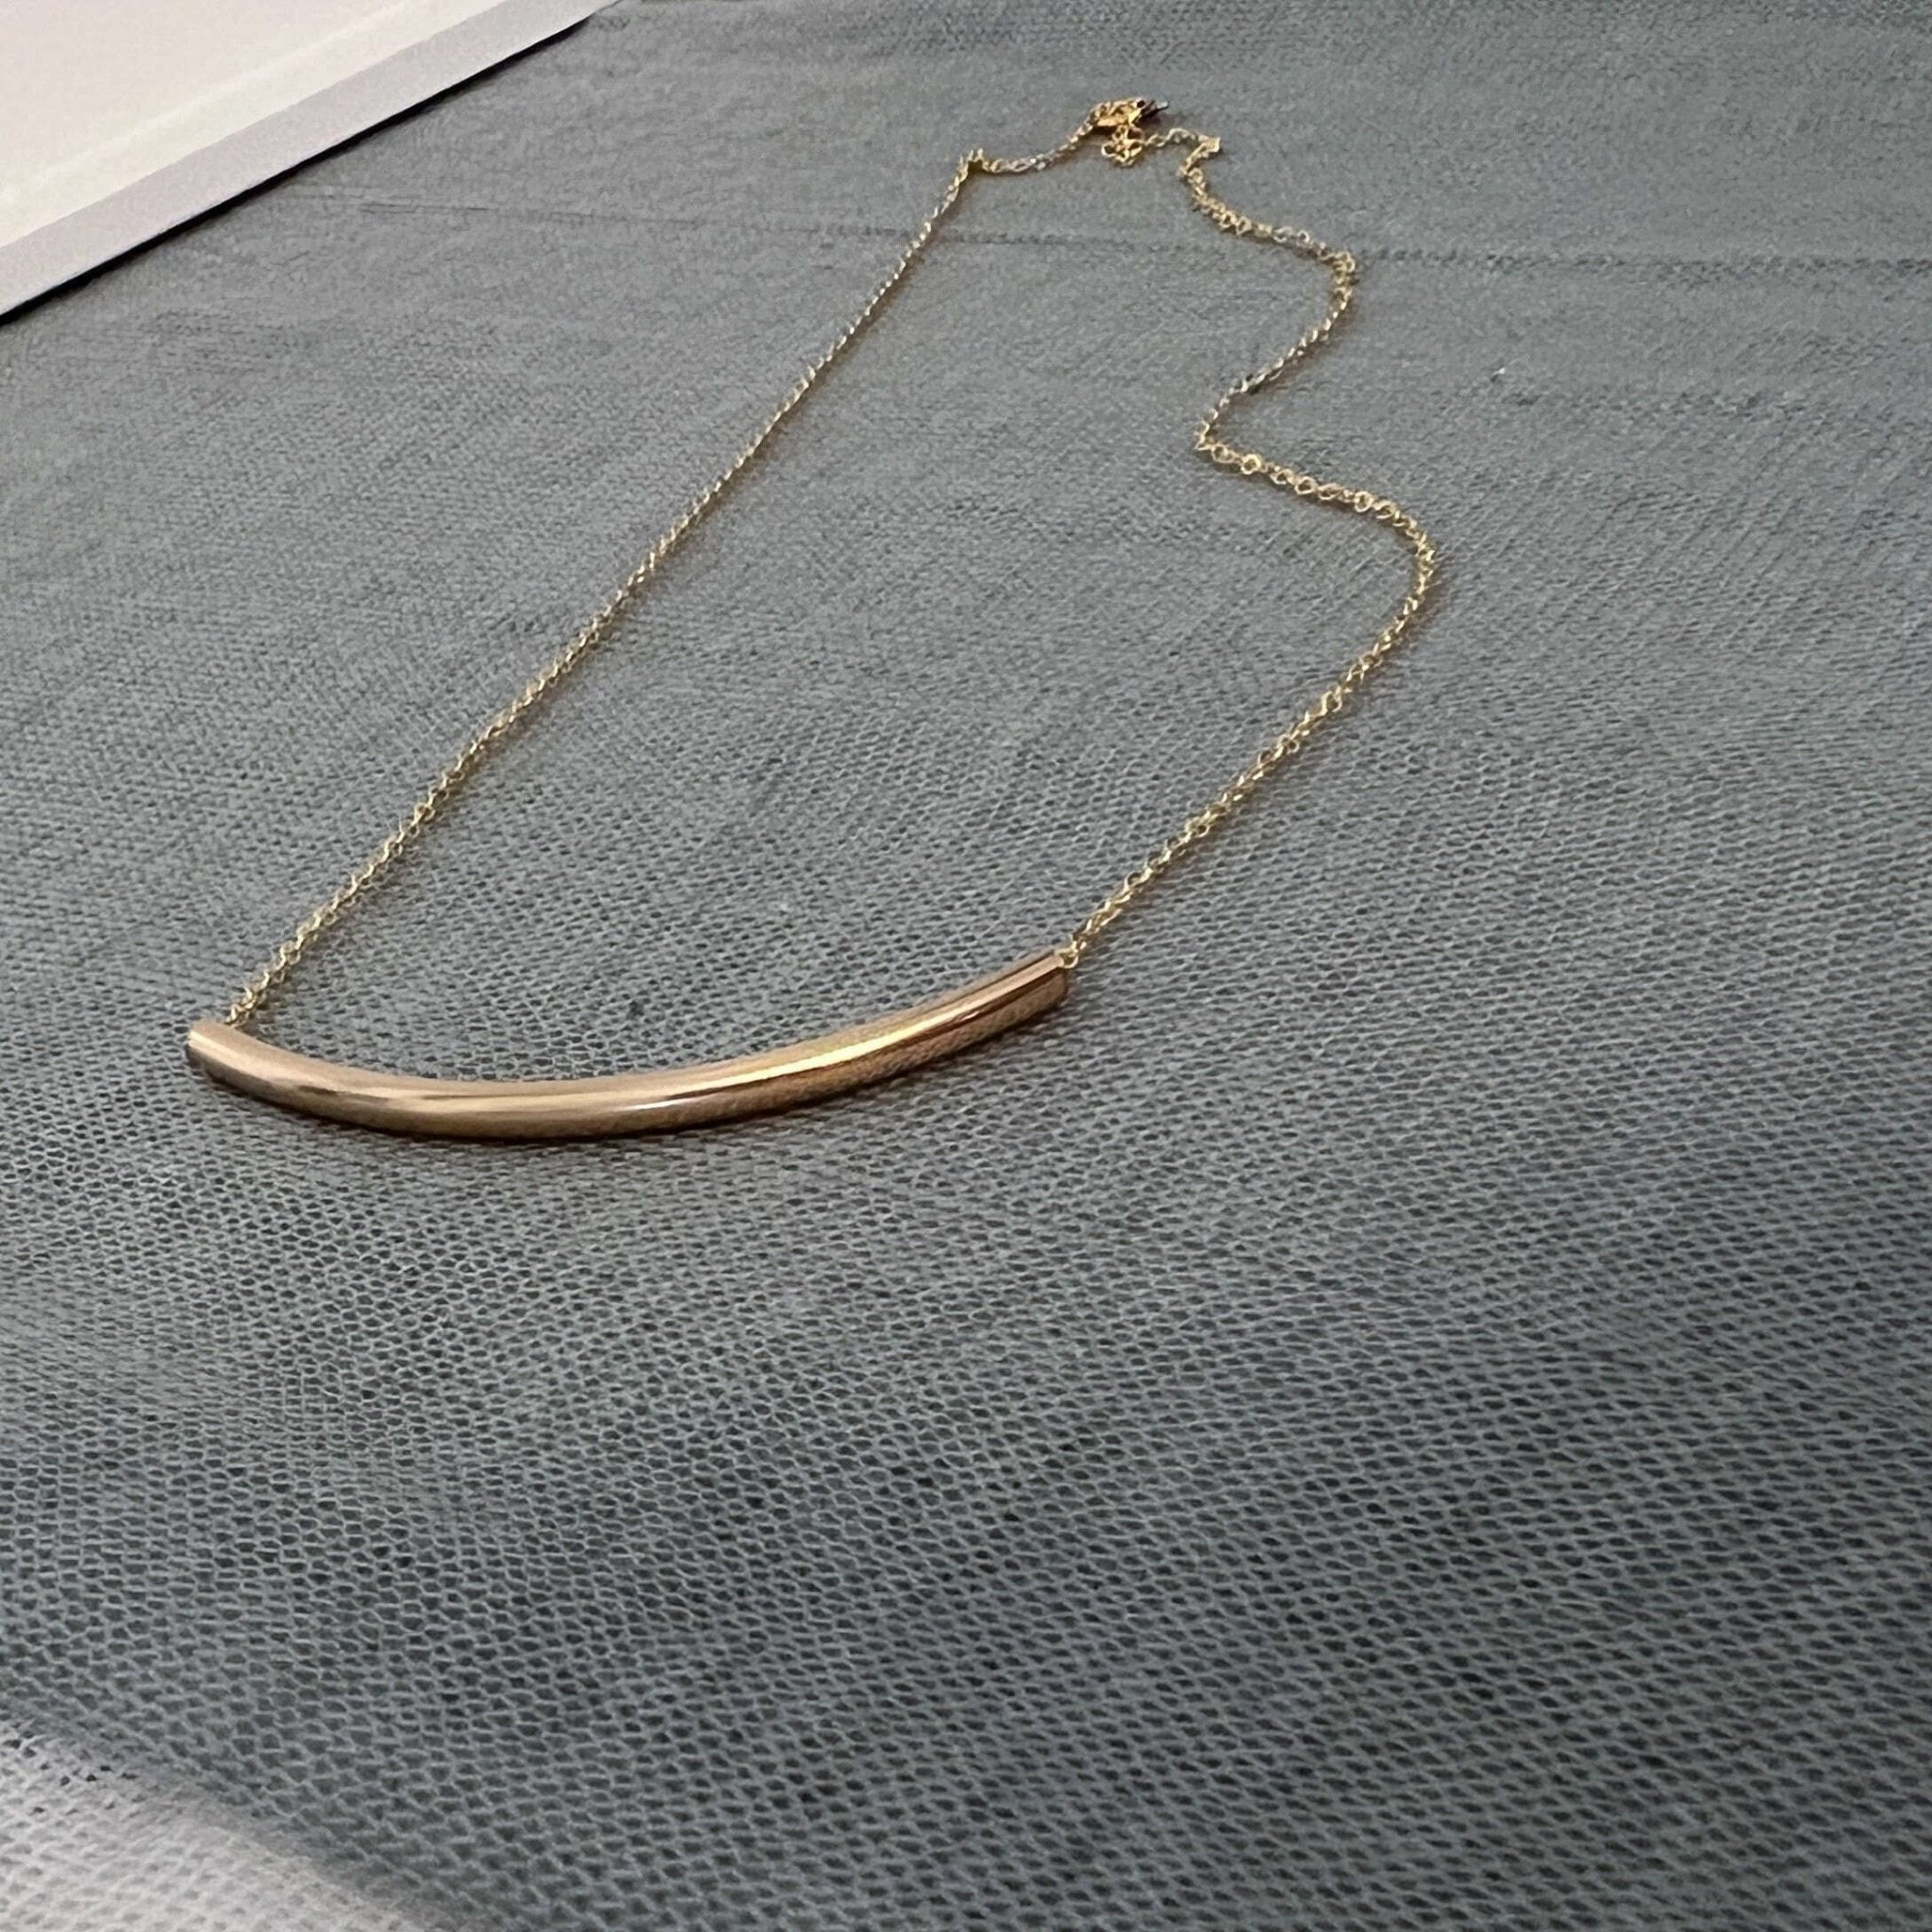 Crescent Curved Bar Necklace - Gold Filled - Sela+Sage - Link & Chain Necklace